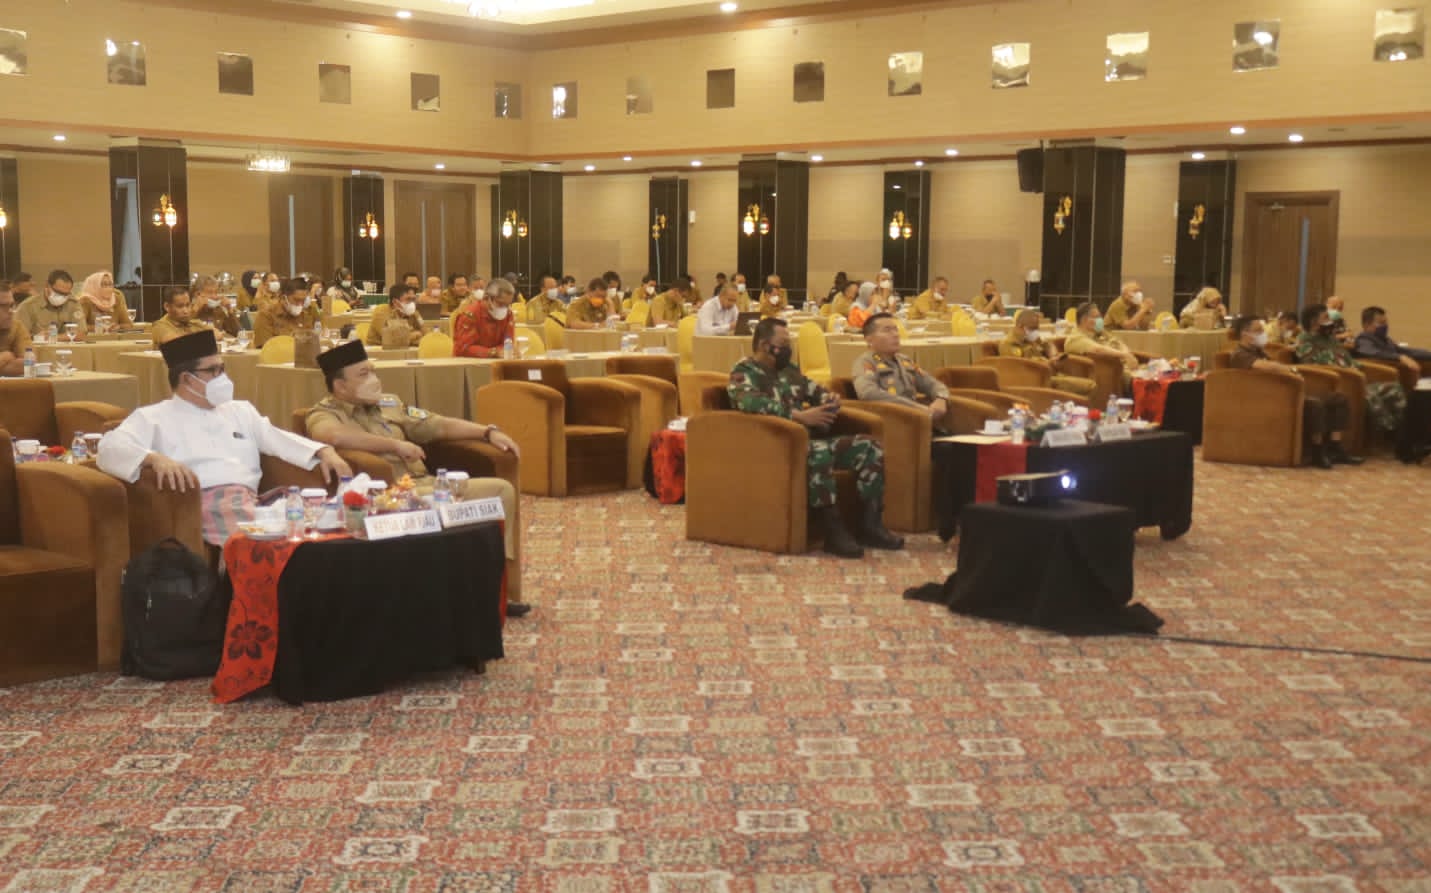 Wakil Bupati Siak, Husni Merza hadiri rapat sosialisasi dan koordinasi serta meresmikan Tim RGRM

